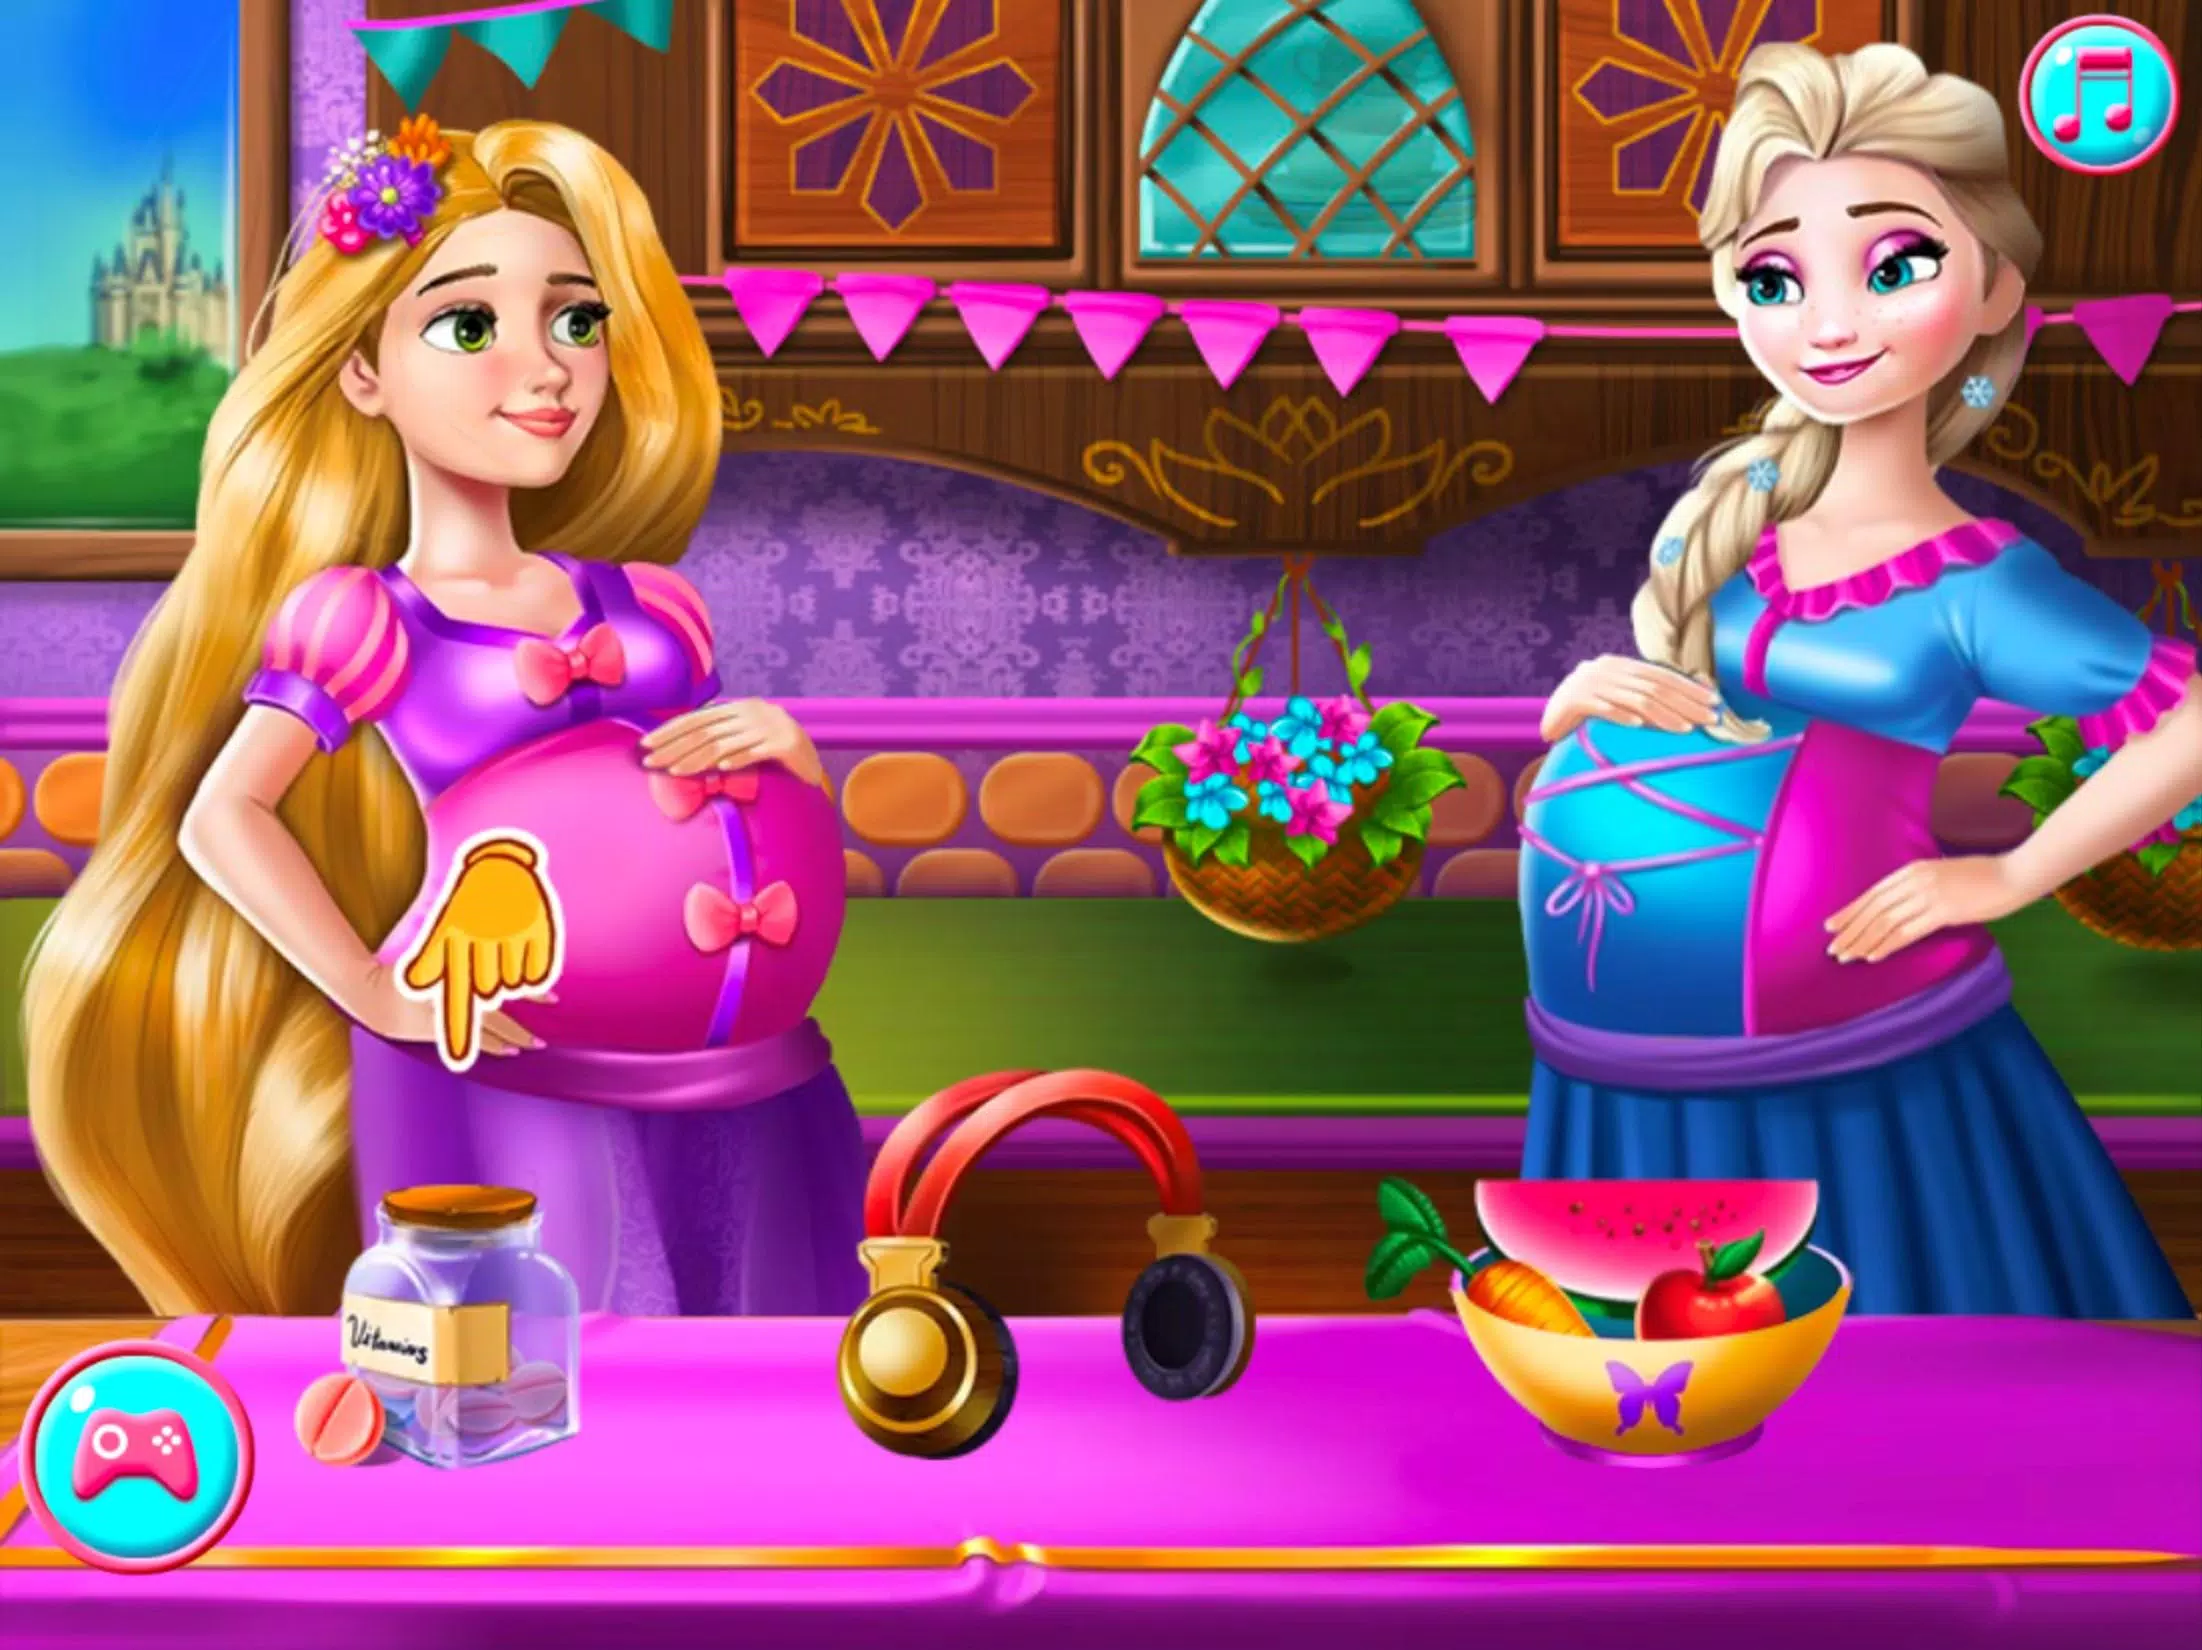 disney princesa anna rapunzel elsa gravidez baby birth care jogo